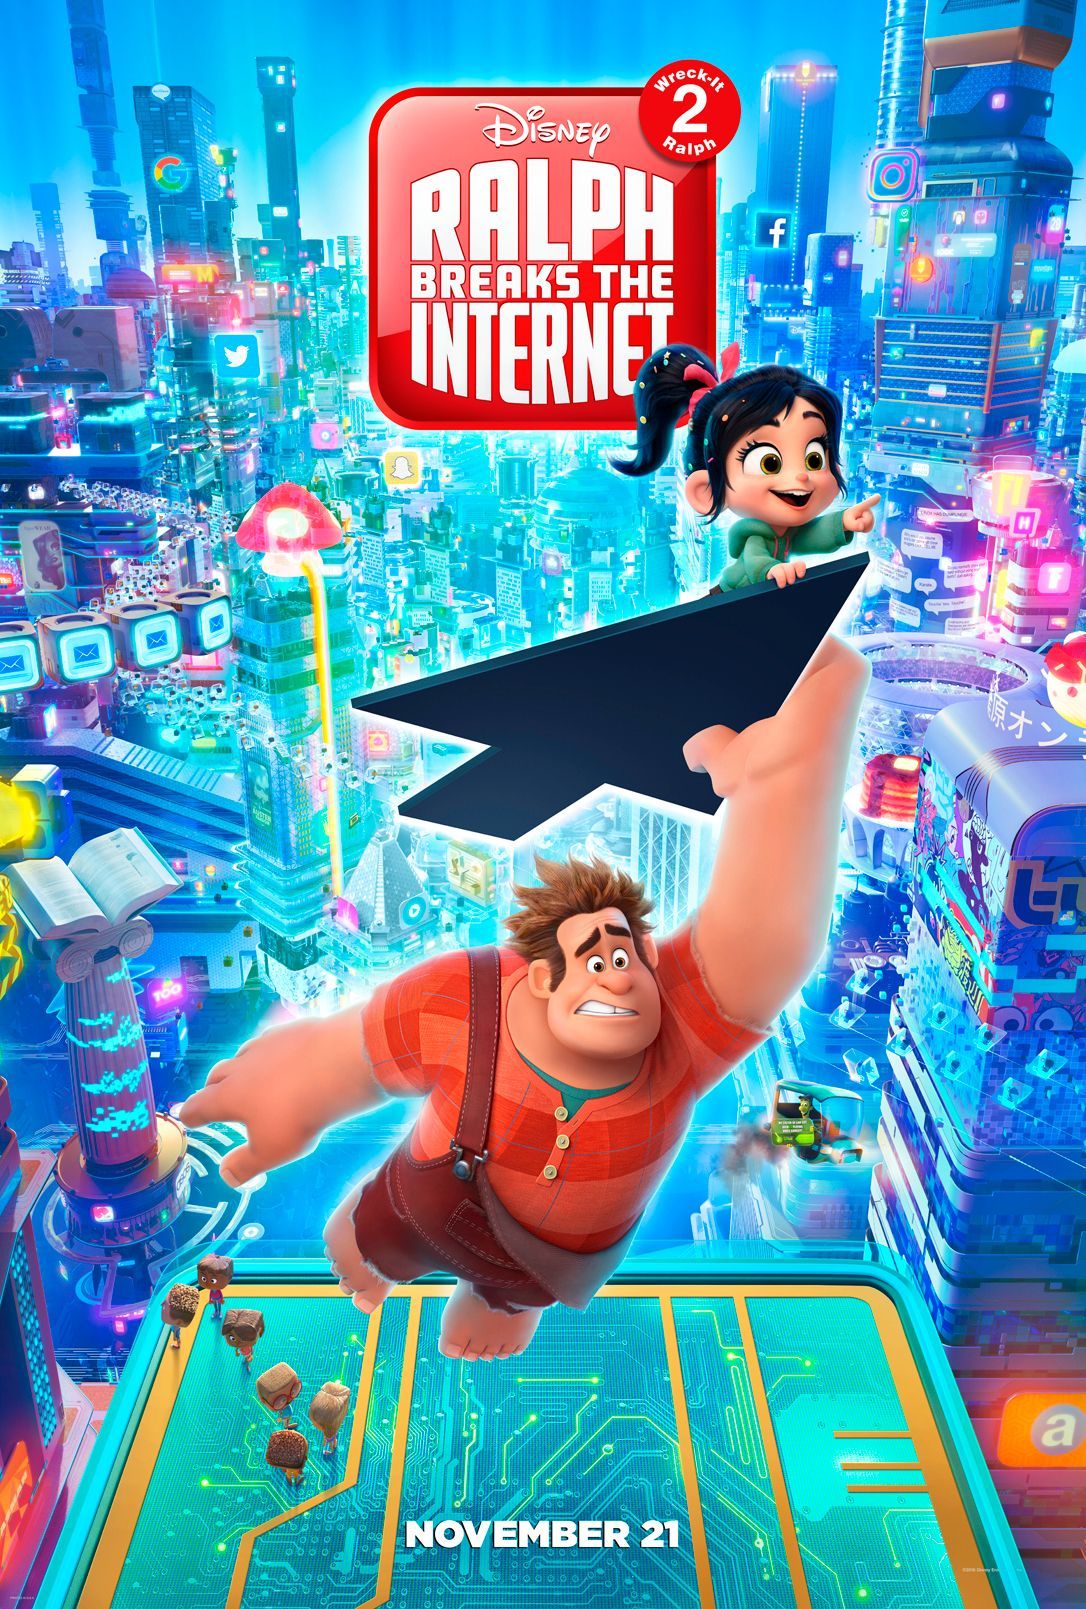 Disney Debuts New Wreck-It Ralph 2 Poster, Trailer på mandag